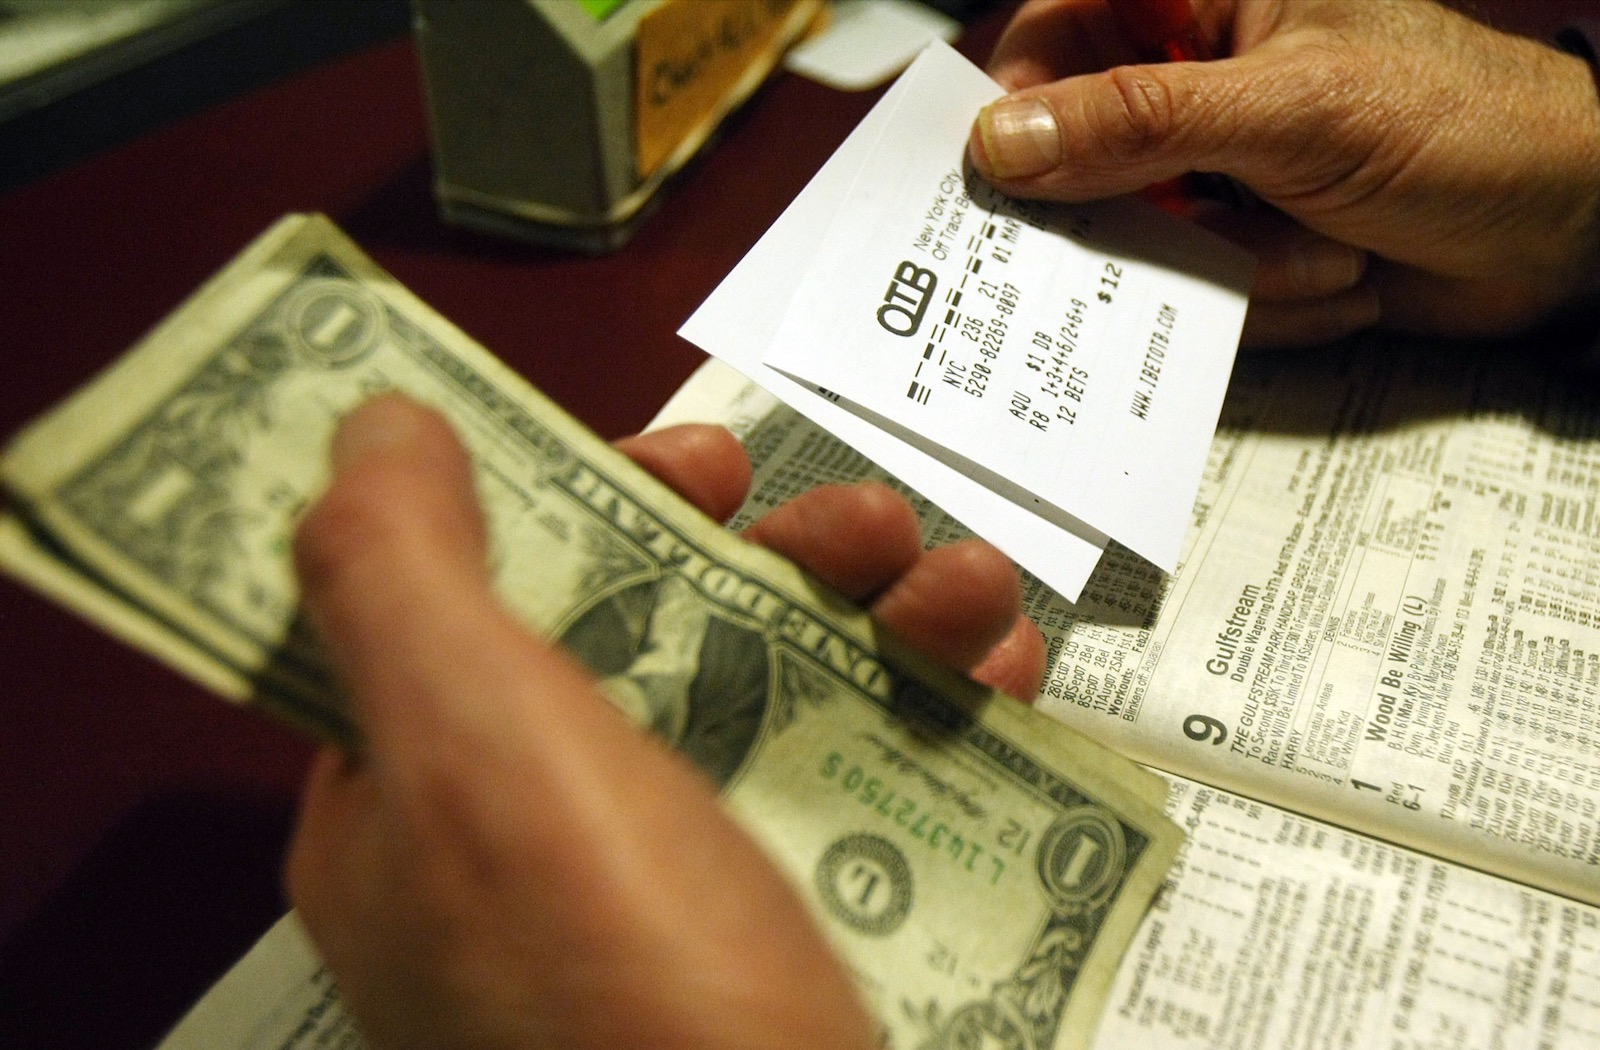 Betting slips and cash